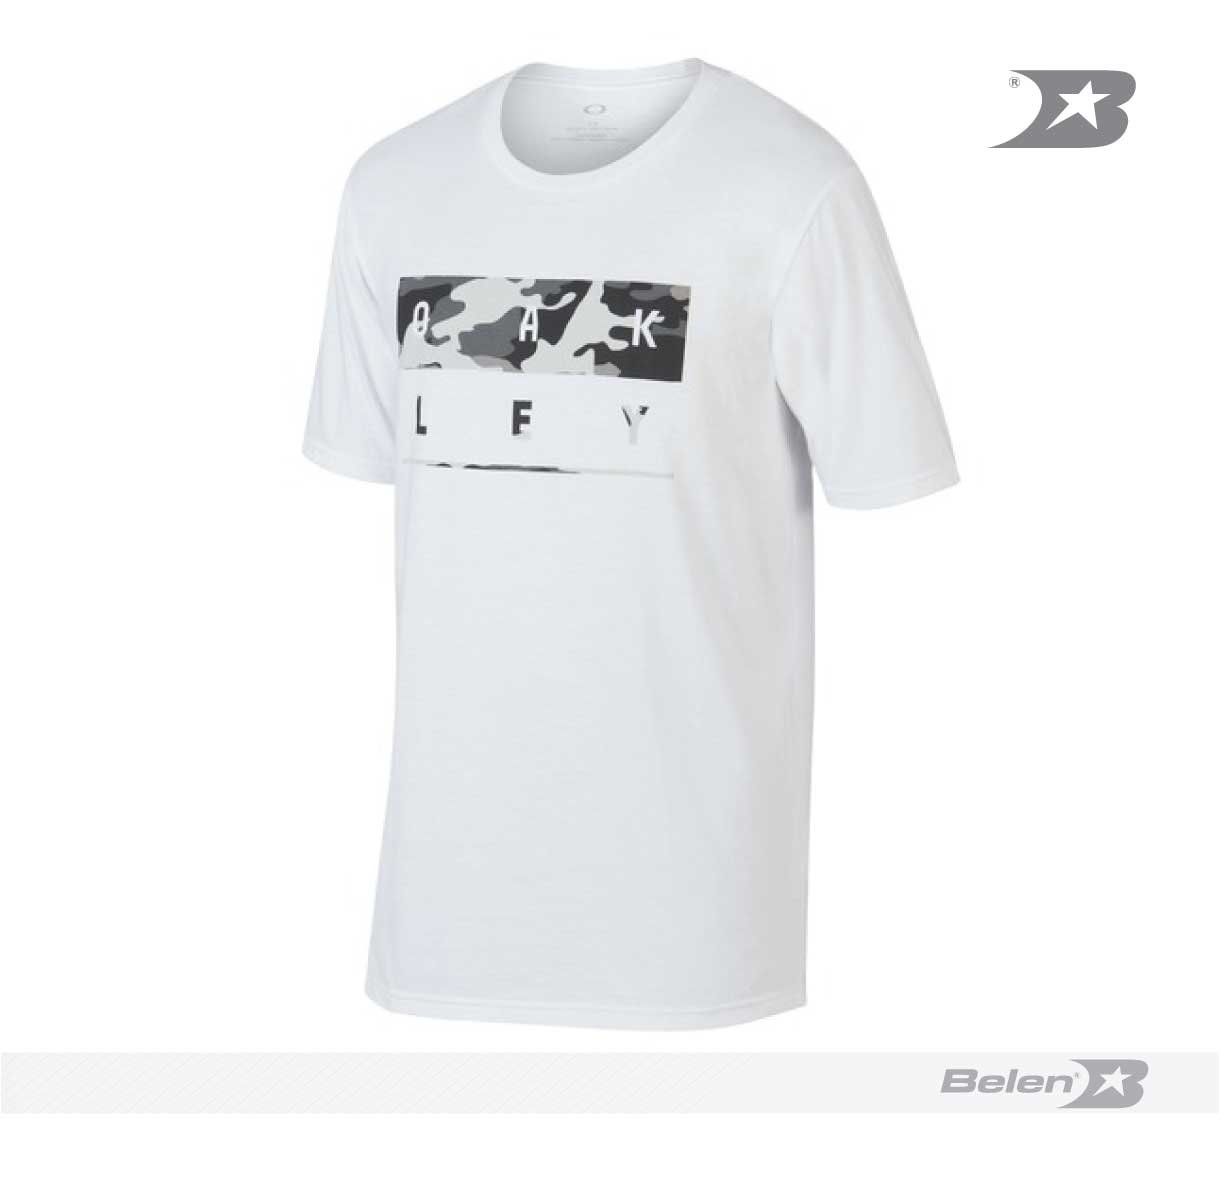 Camiseta oakley 50 stack camo white - Tienda militar - Uniforme militar |  Belén